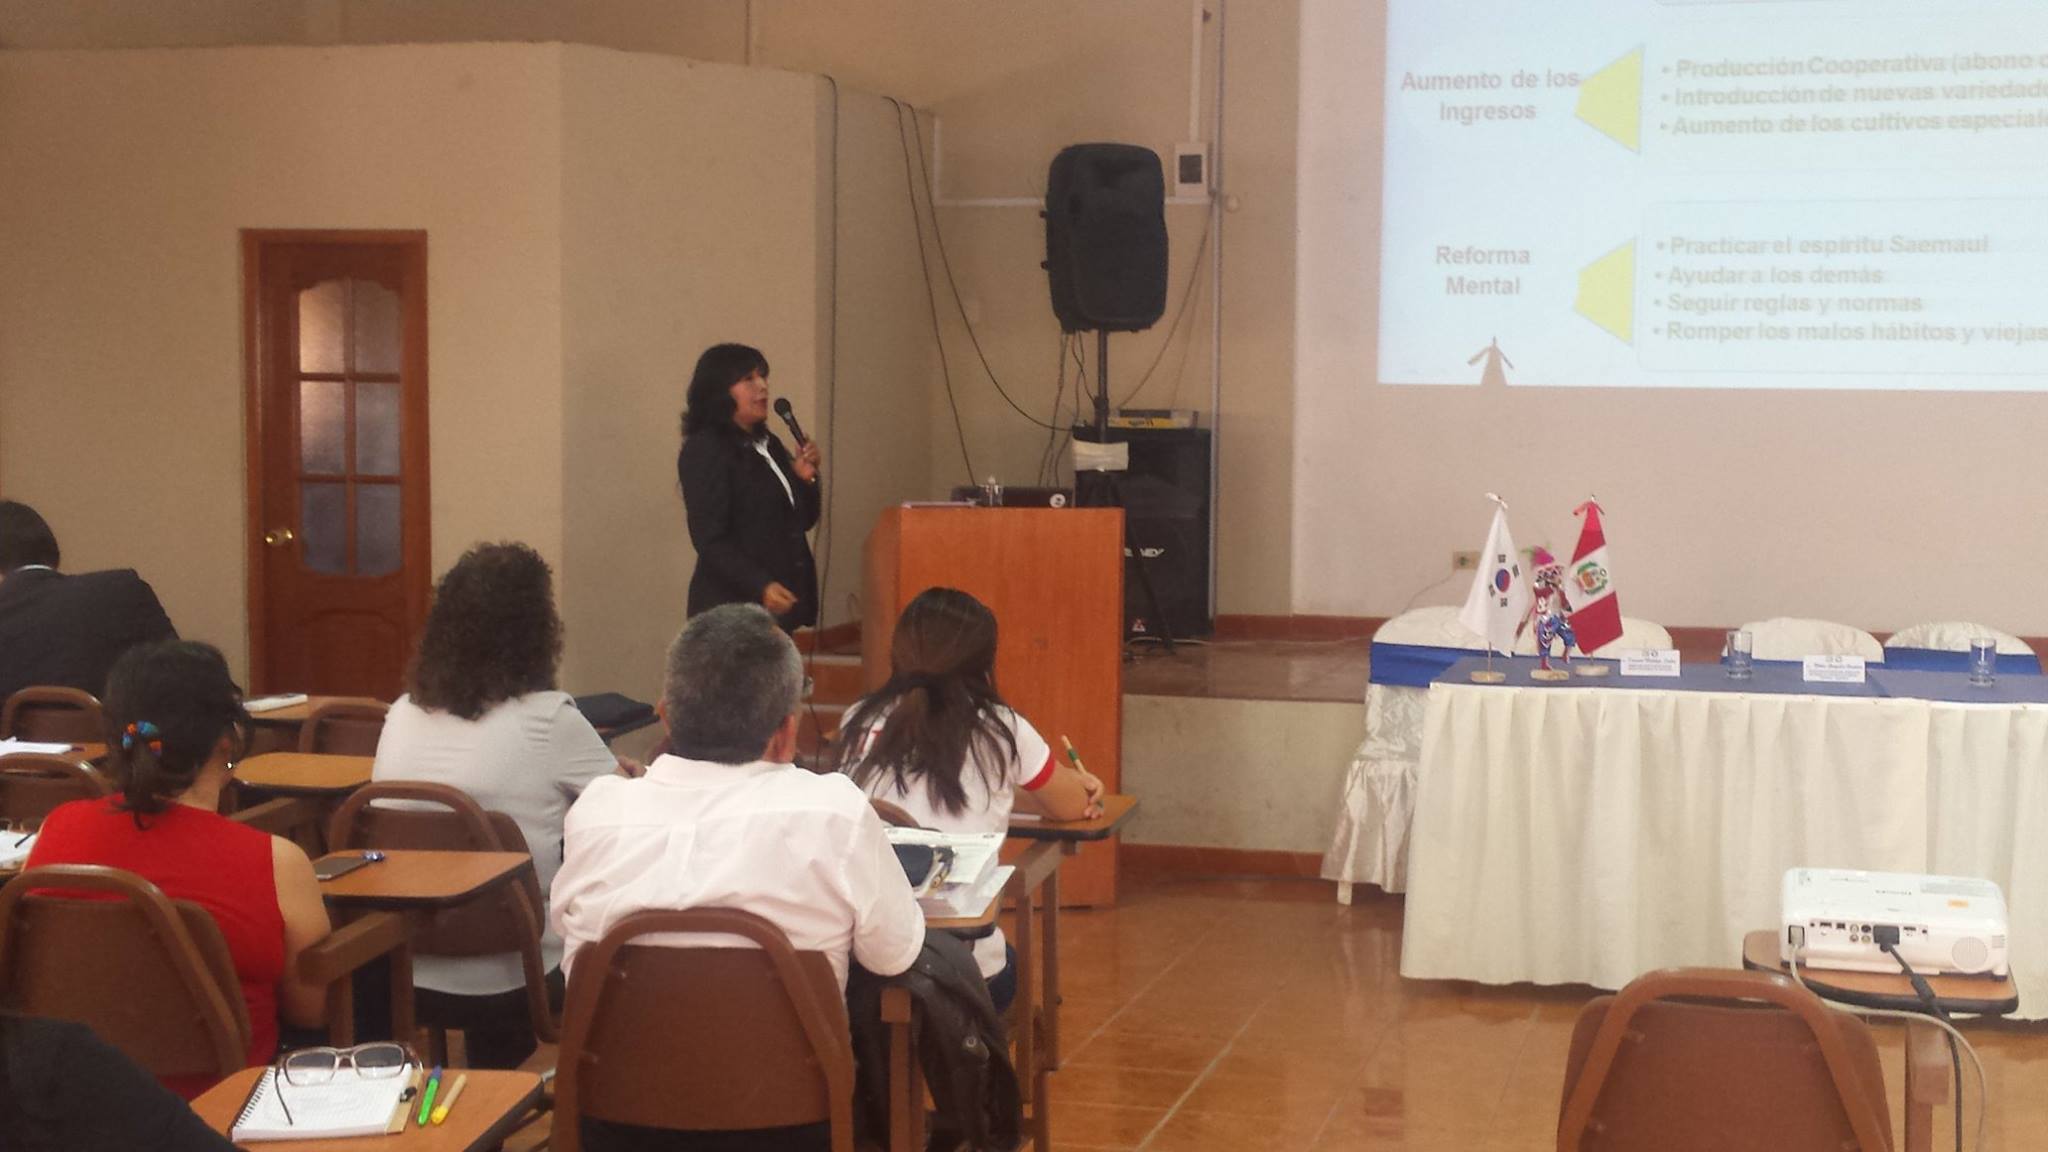 Peruvian alumni present at capacity development workshop in Huanuco 큰 이미지[마우스 클릭 시 창닫기]